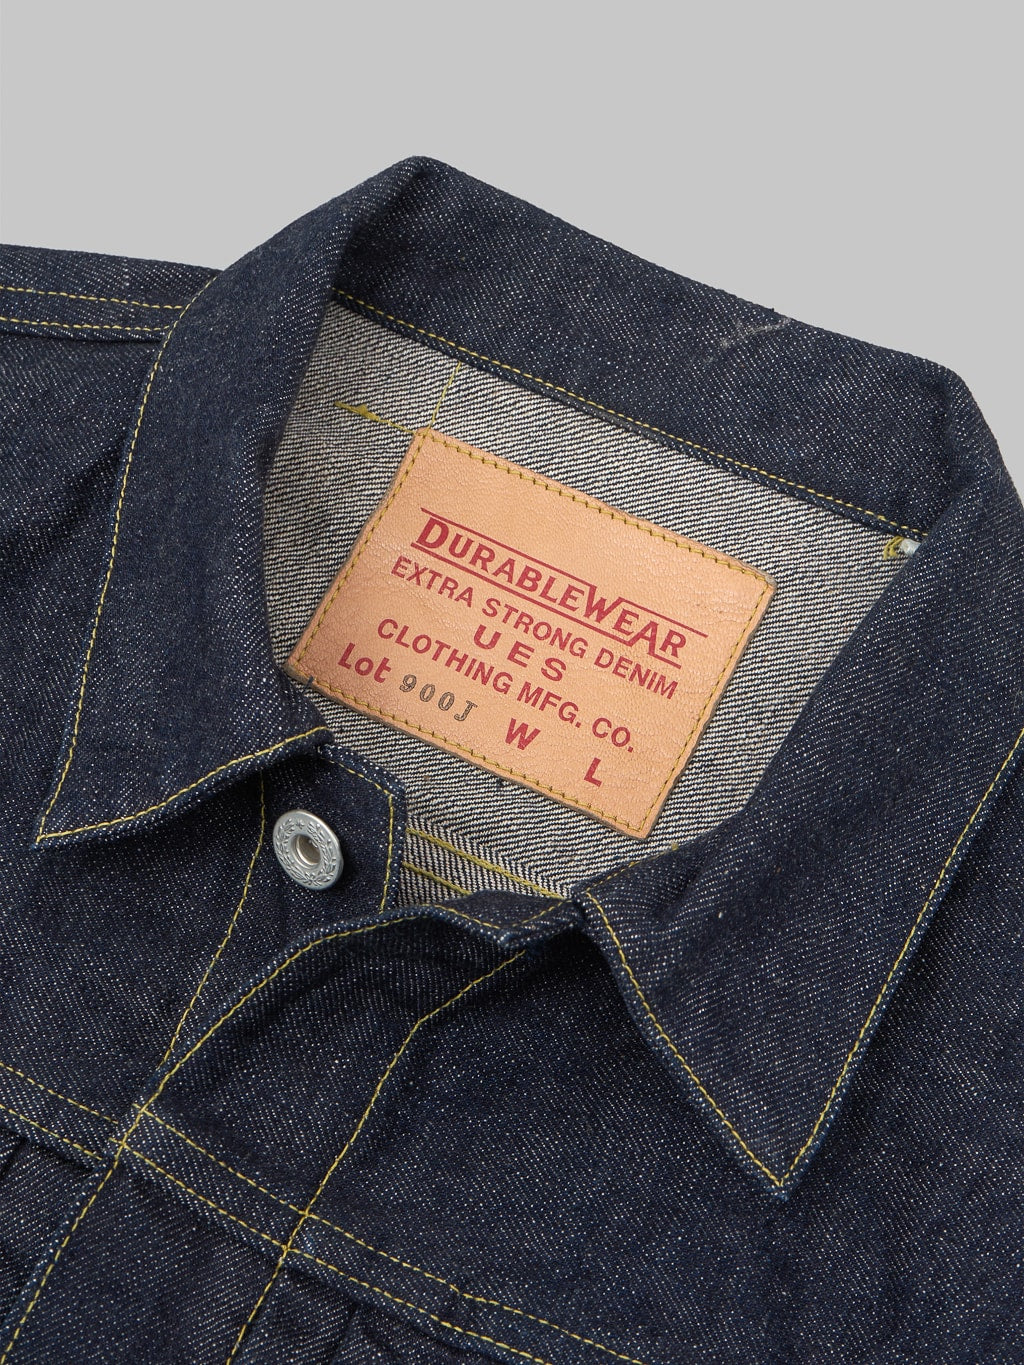 UES Post World War Denim Jacket one pocket interior leather patch